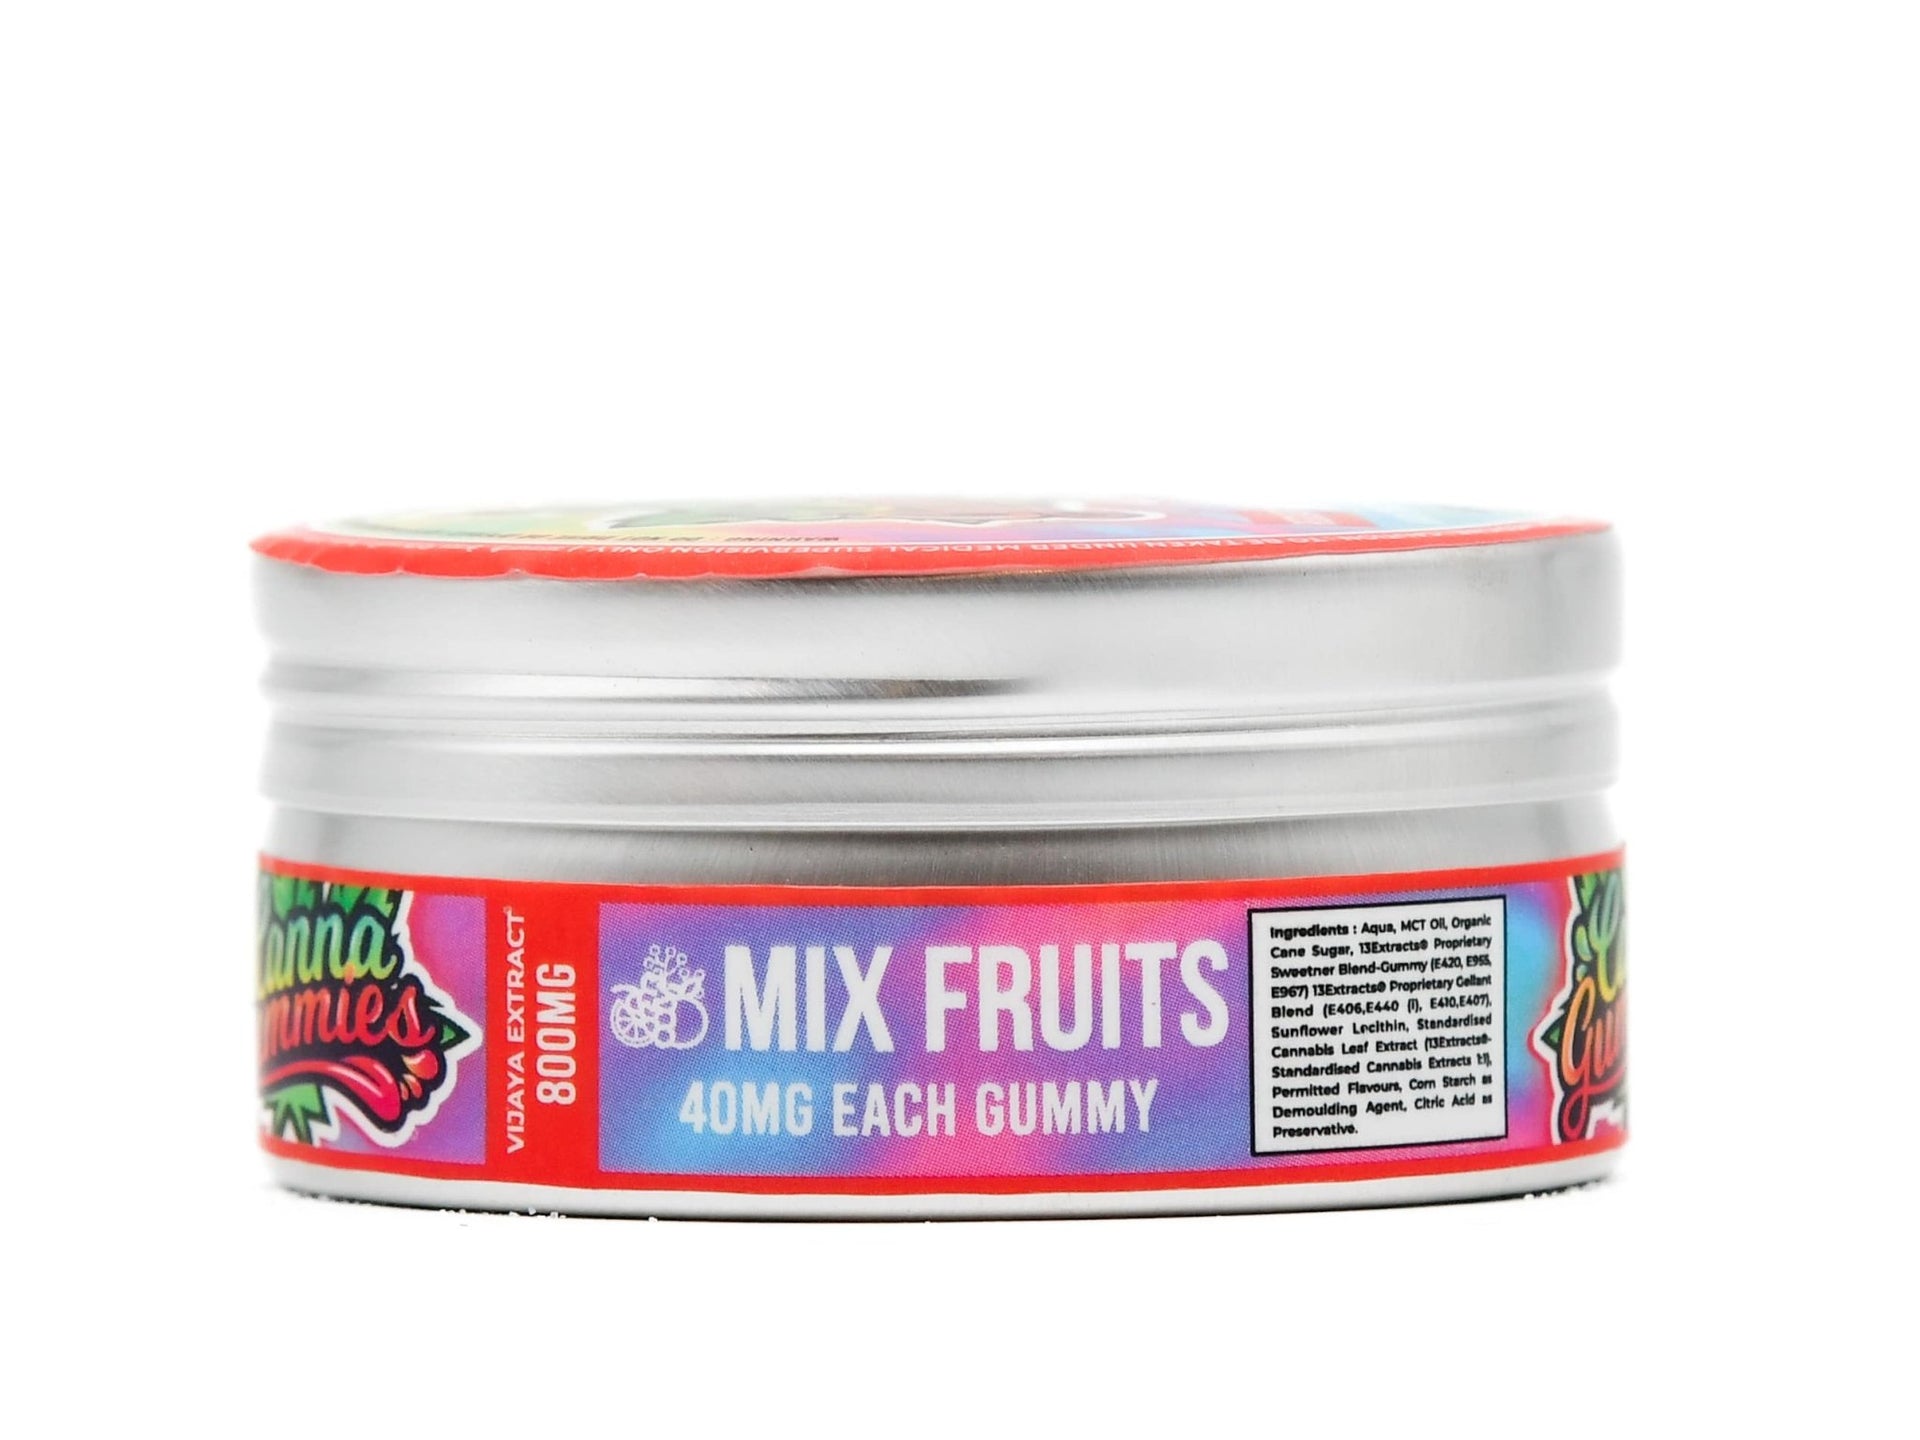 Canna Gummies - Cannabis Infused Gummies 1:1 - Mix Fruits - CBD Store India